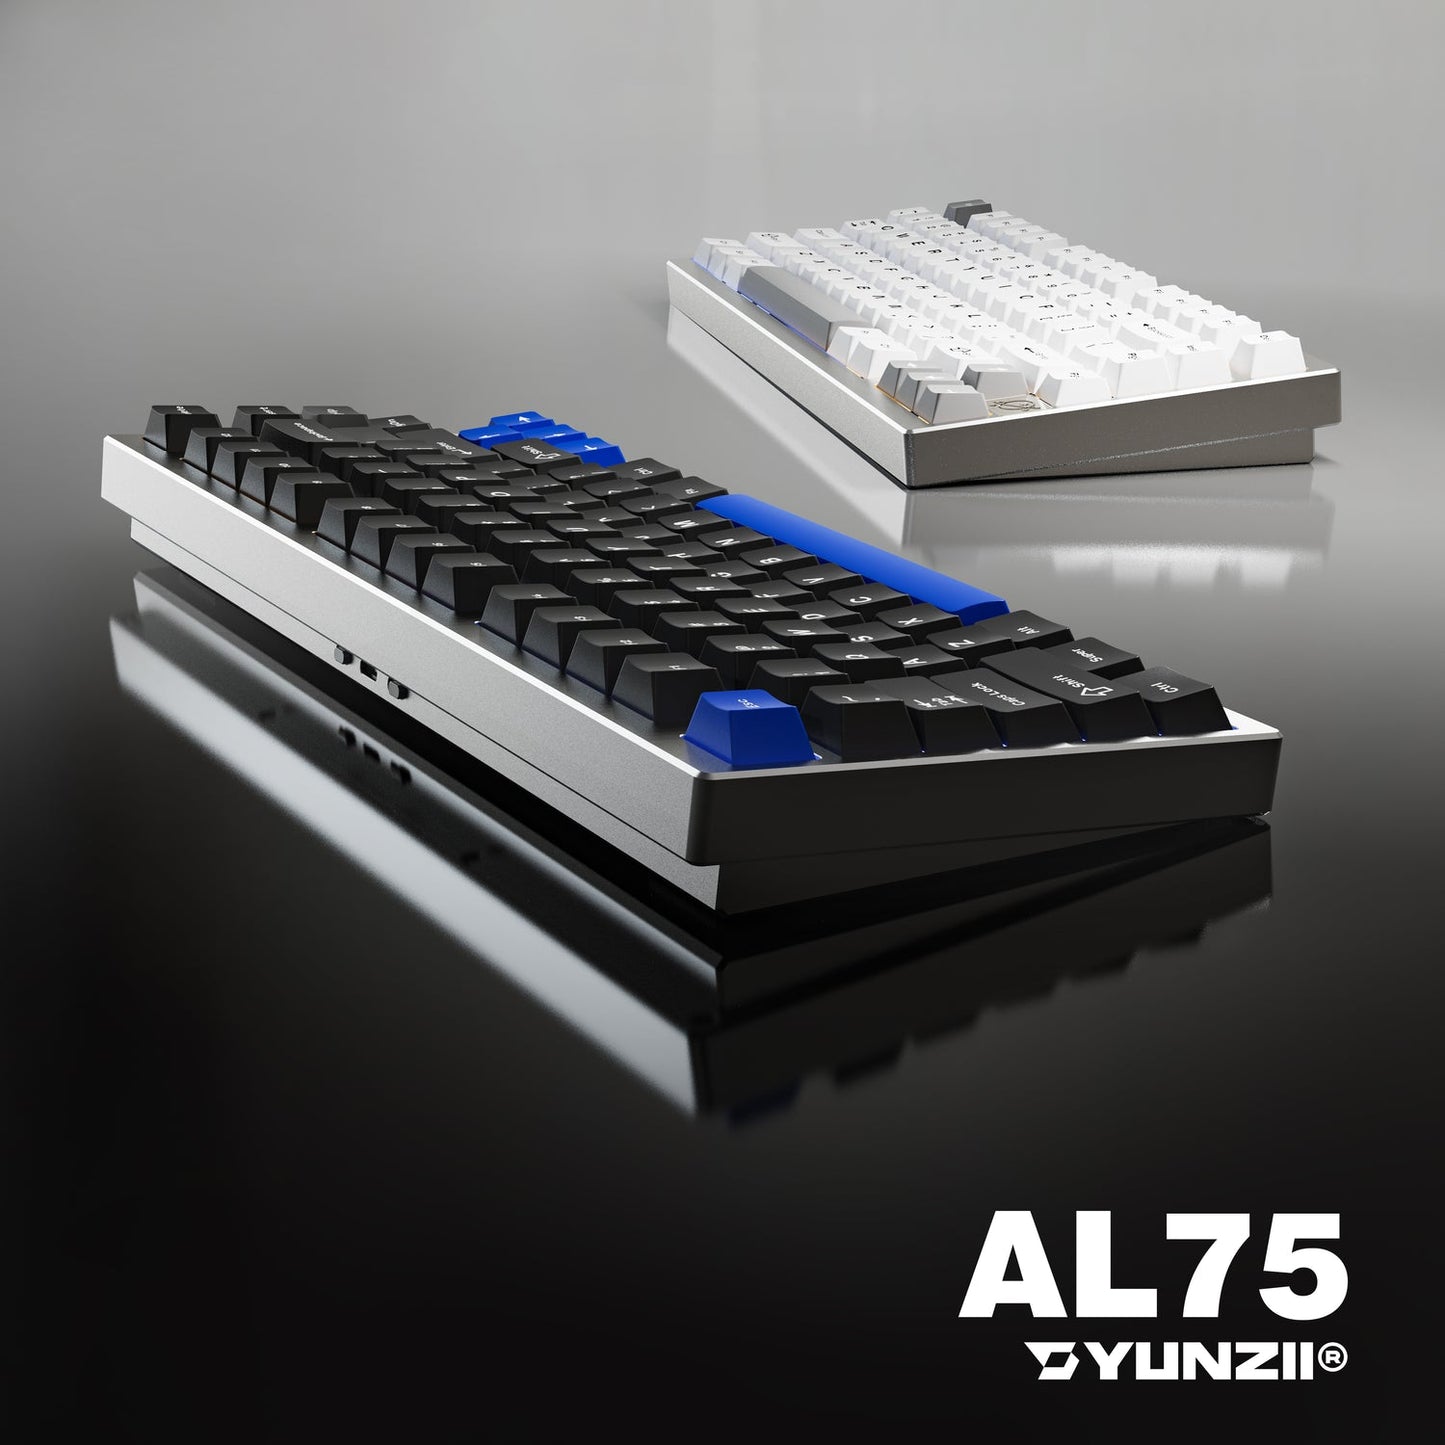 Yunzii AL75 Aluminum Mechanical Keyboard